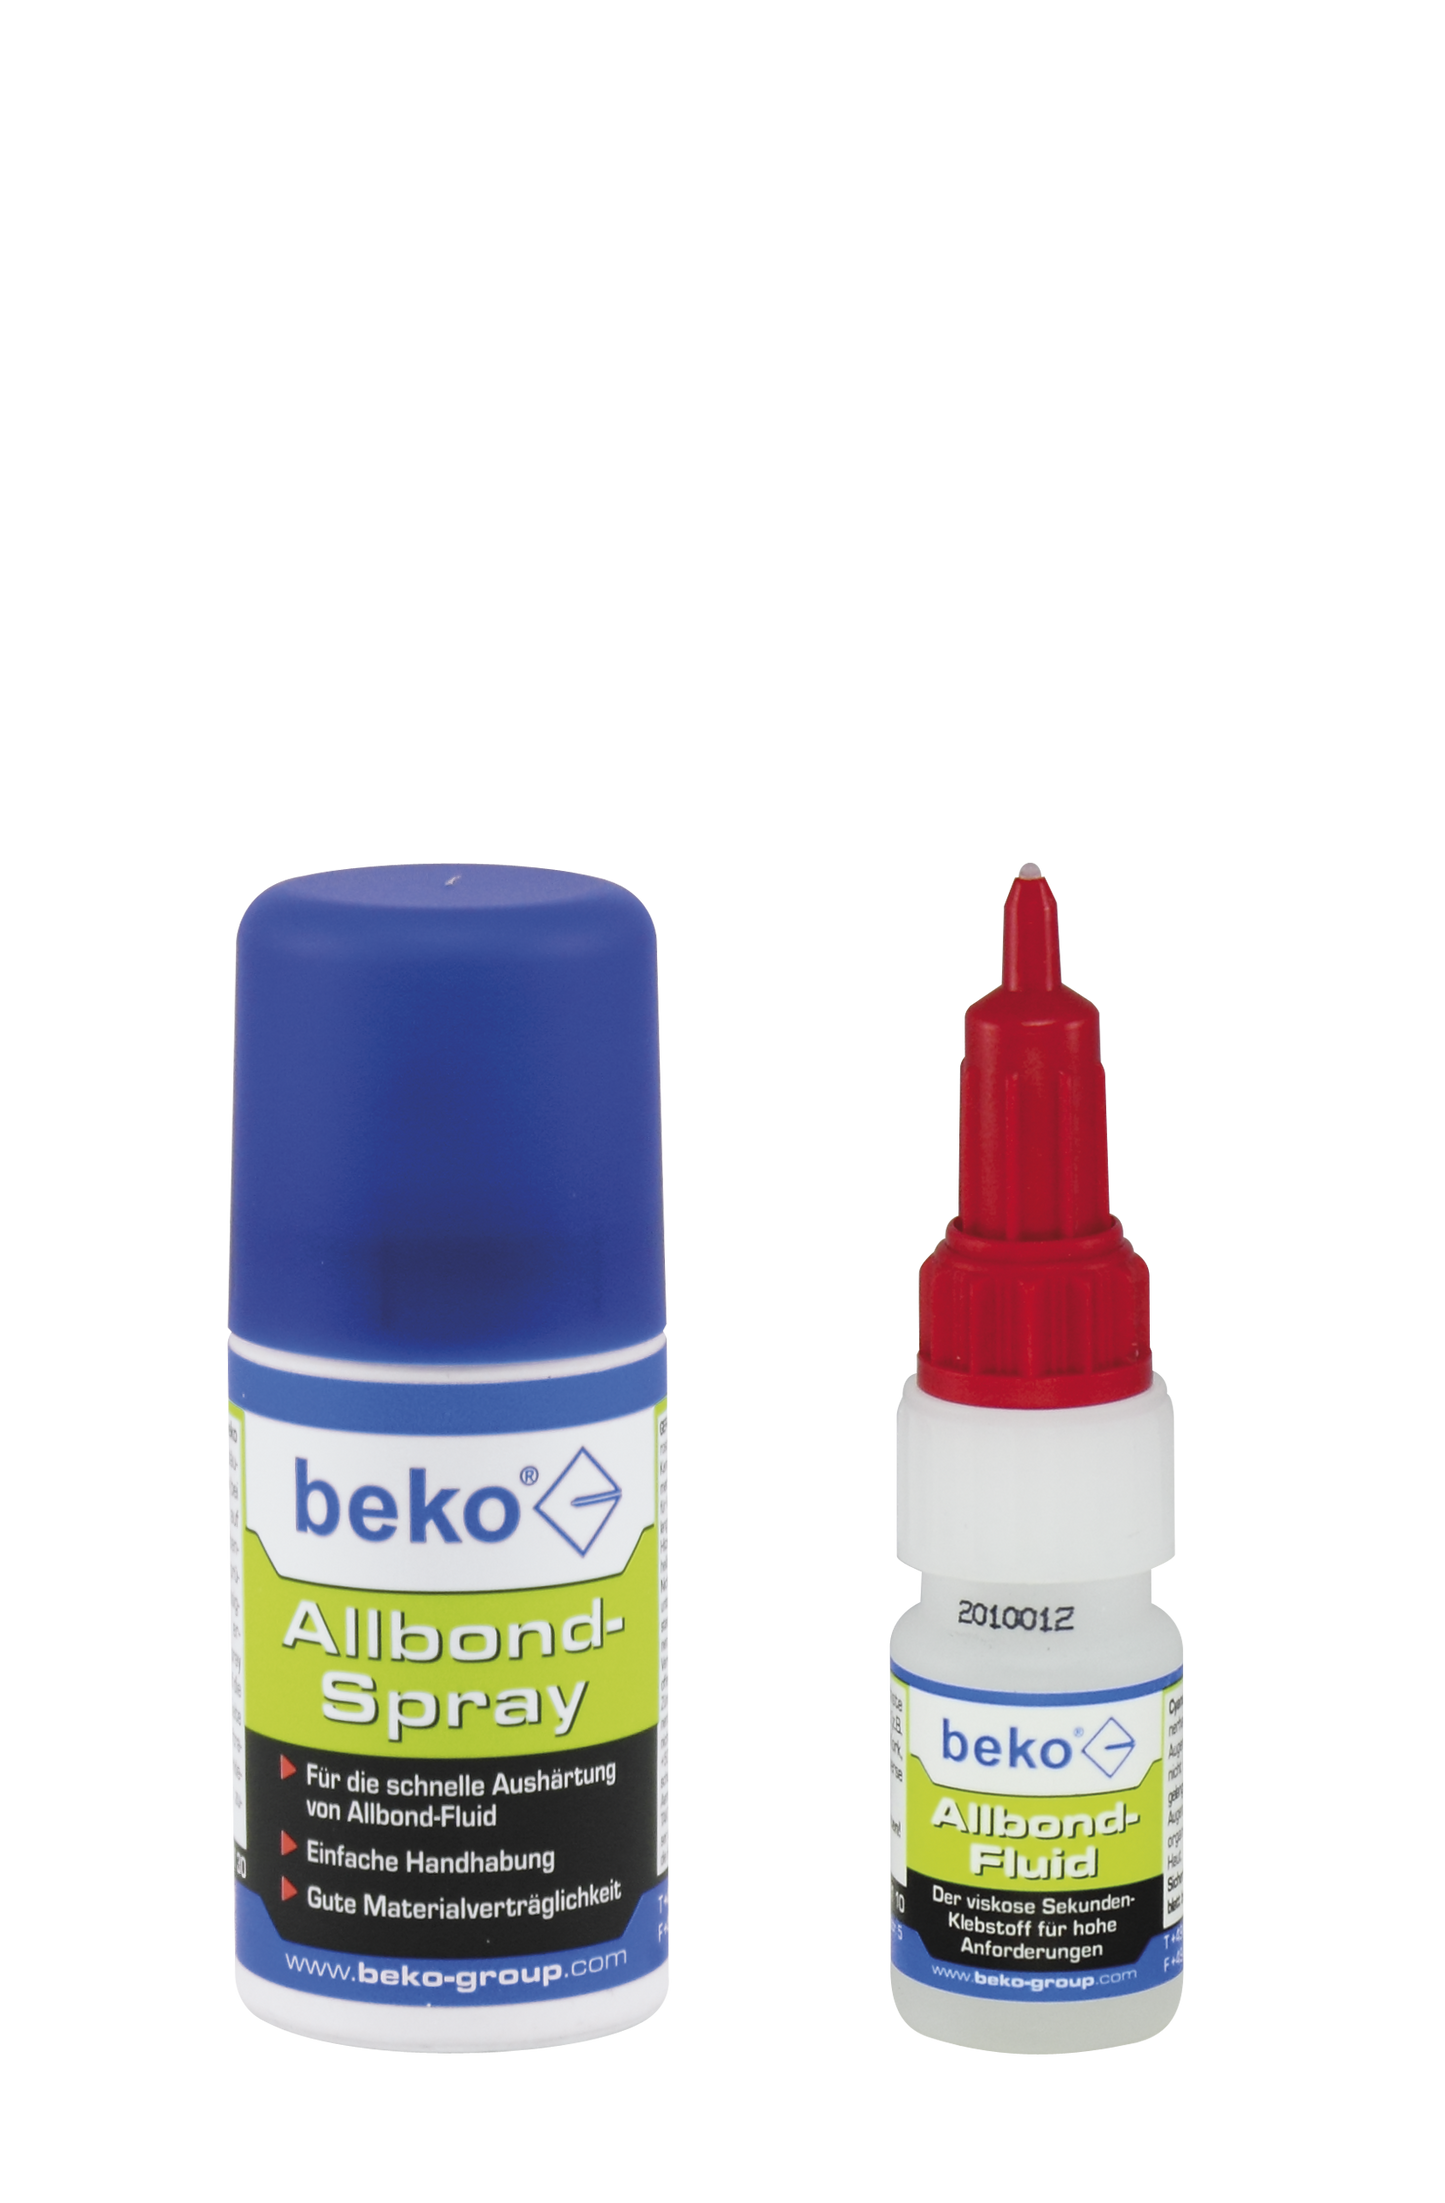 beko Allbond-Ser 1 x 10g Allbond-Flurid 1 x 30ml Allbond-Spray Aktivator-Spray